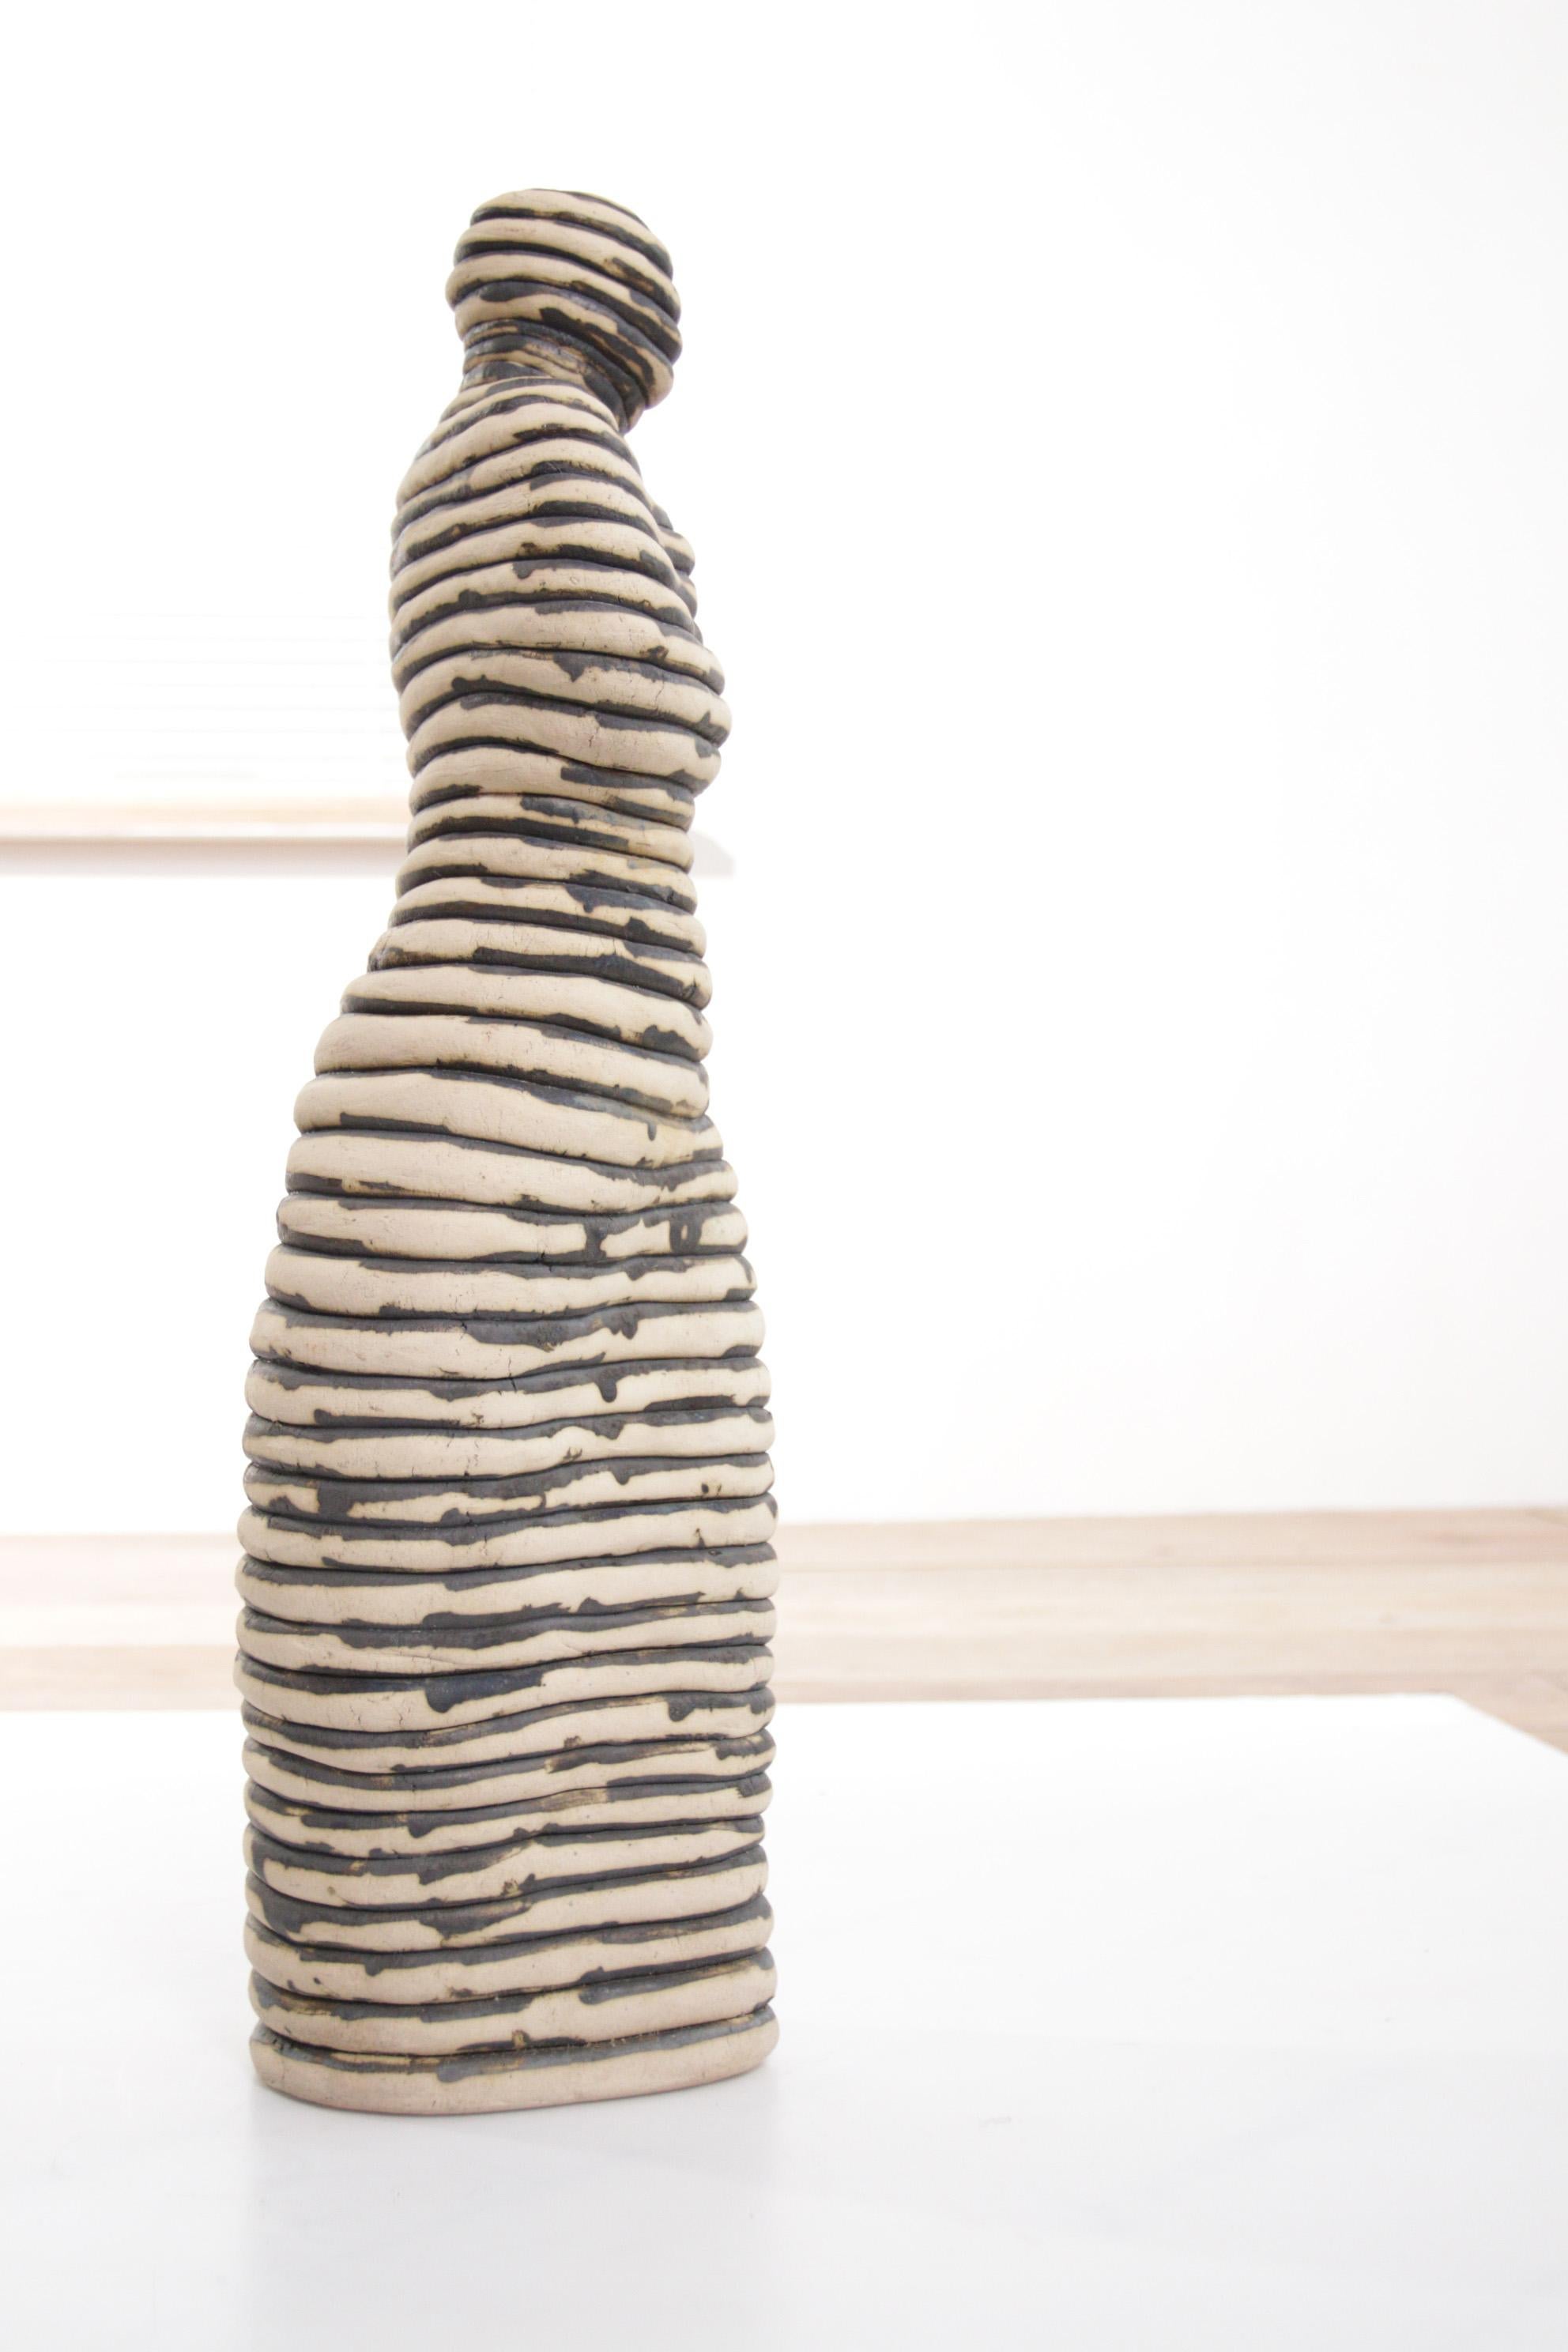 Contemporary Andrea Dogterom Ceramic Sculpture Women in Stripes